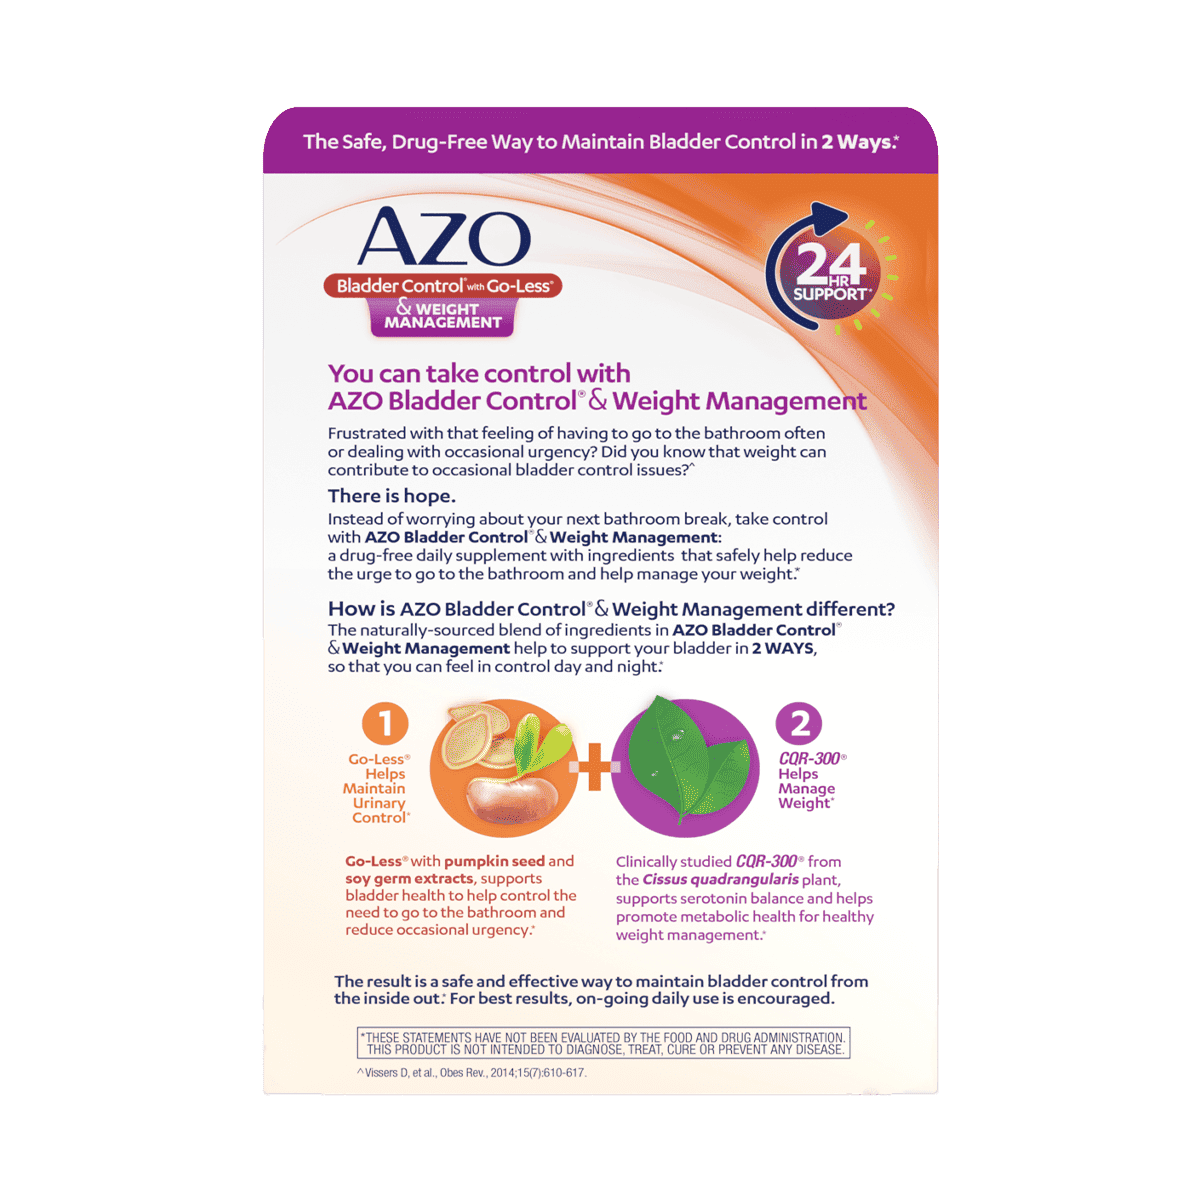 AZO Bladder Control & Weight Management